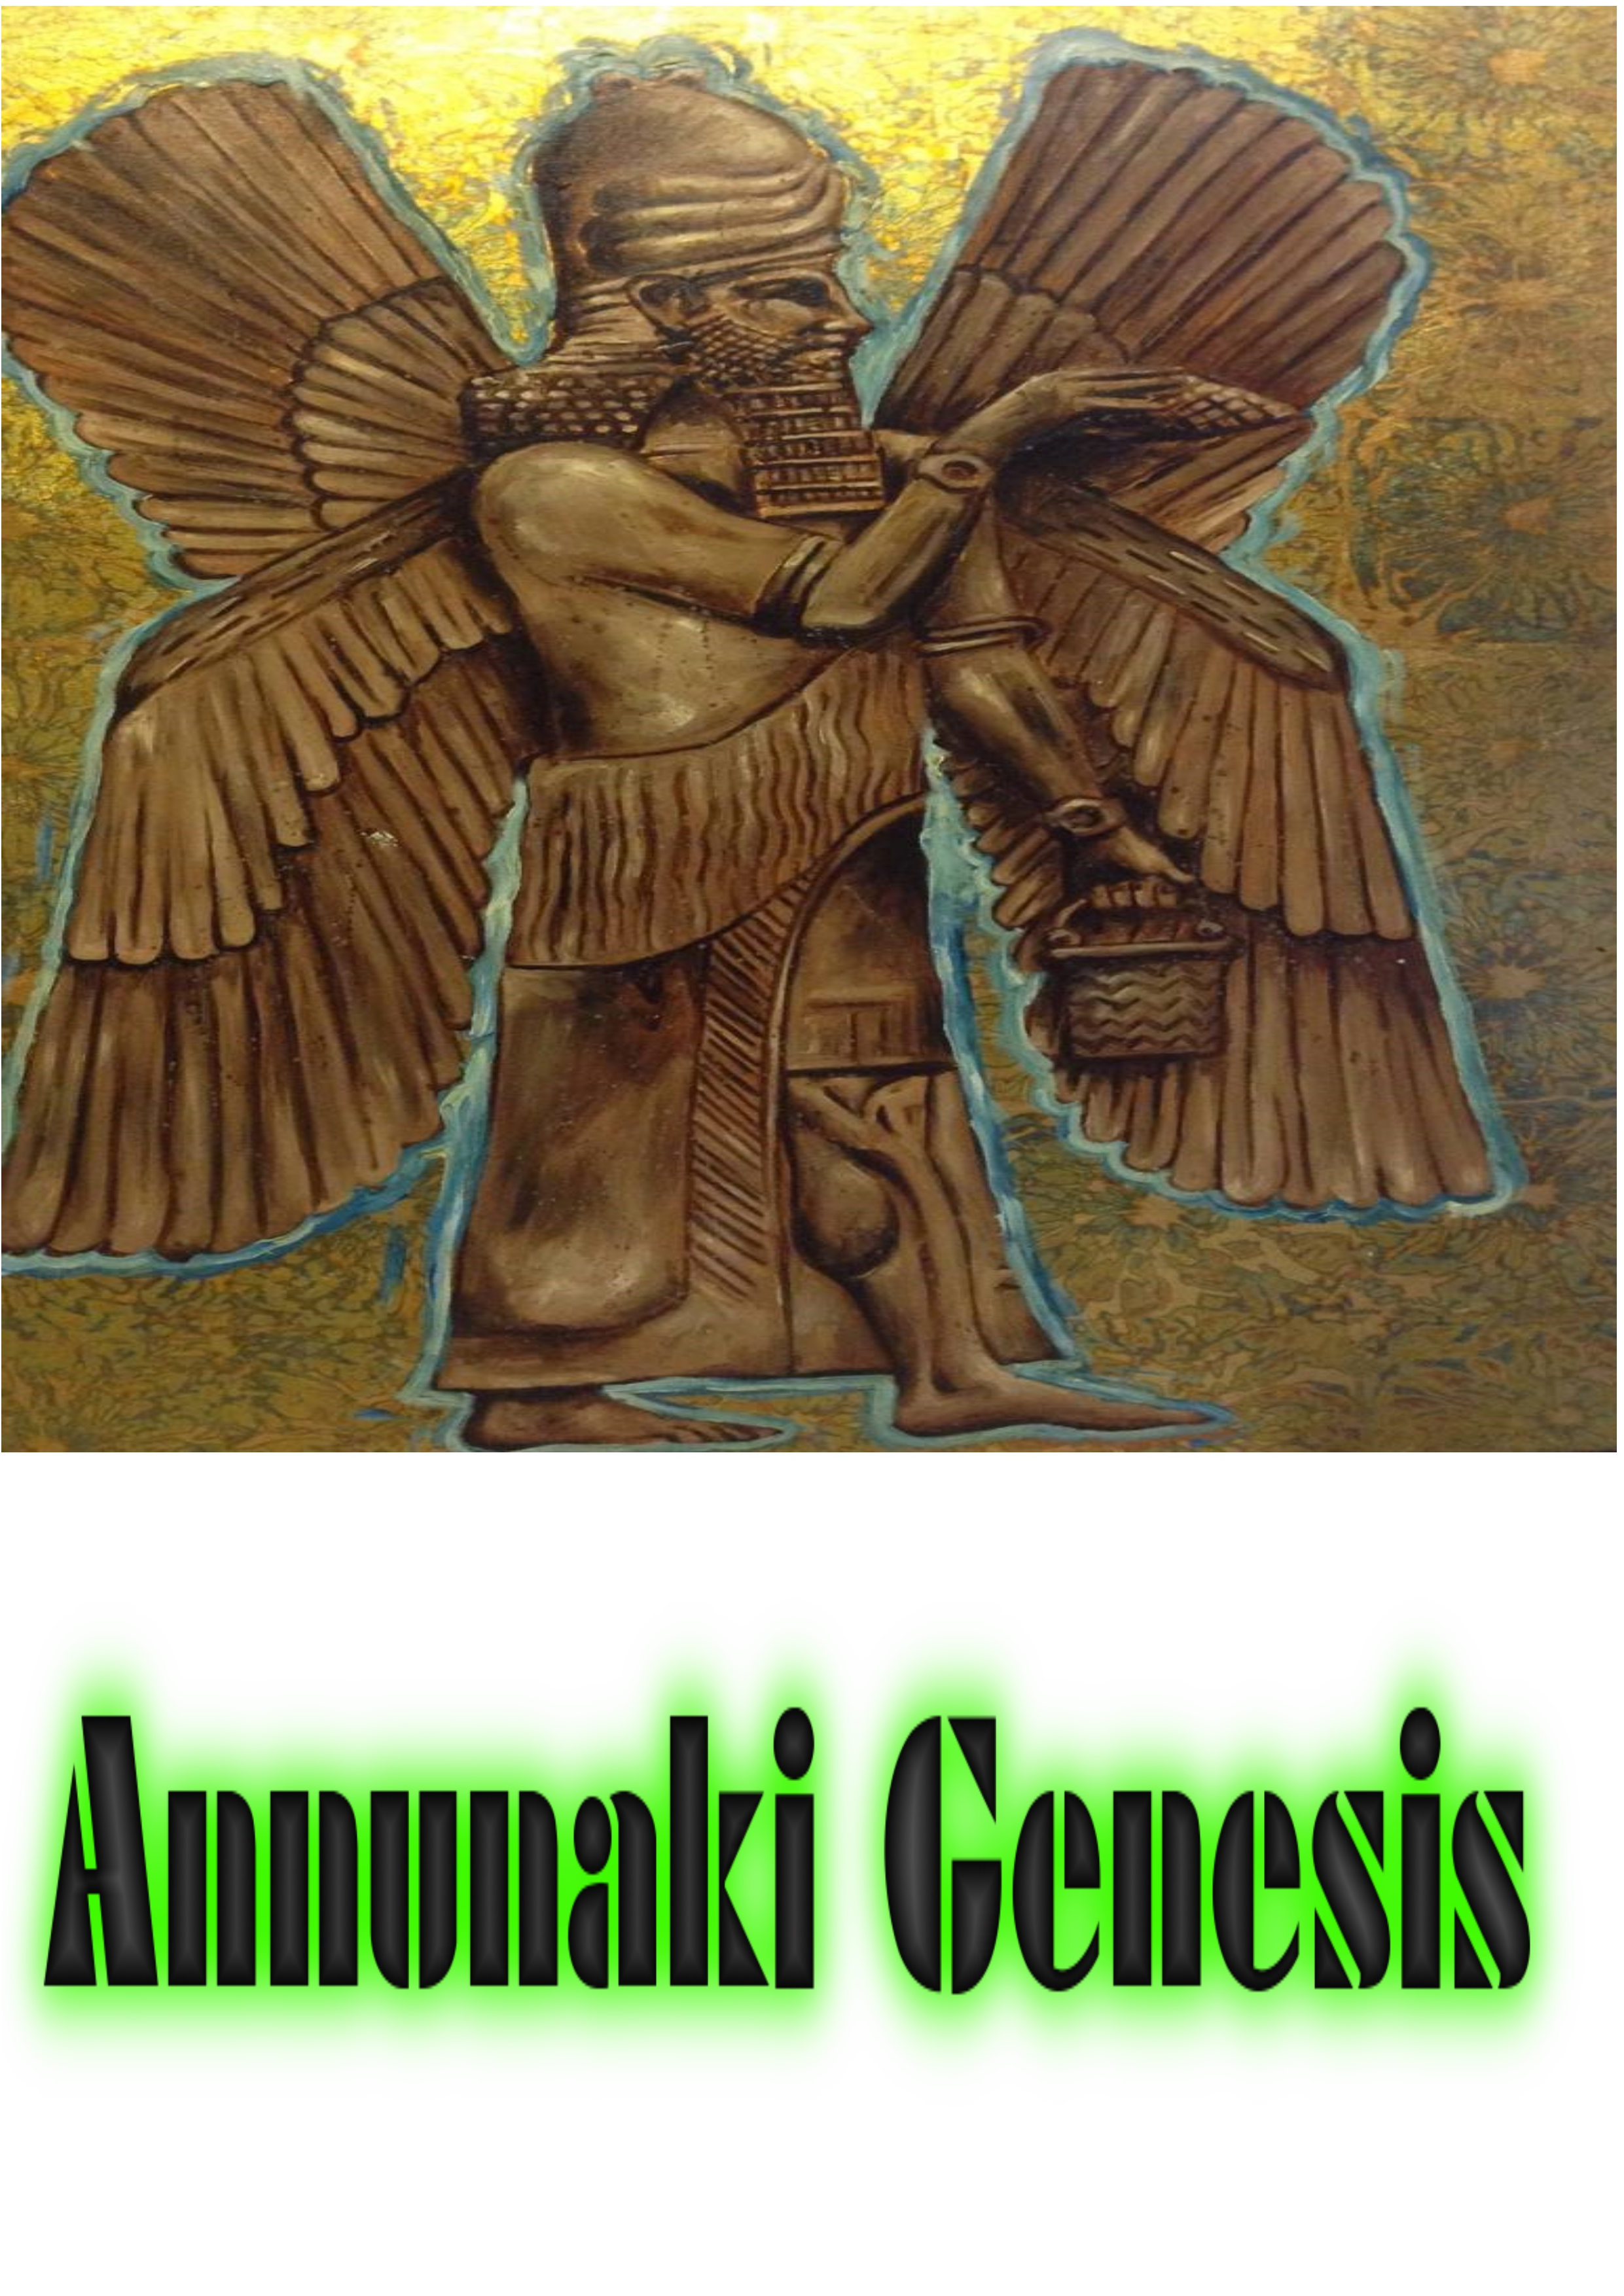 Annunaki genesis